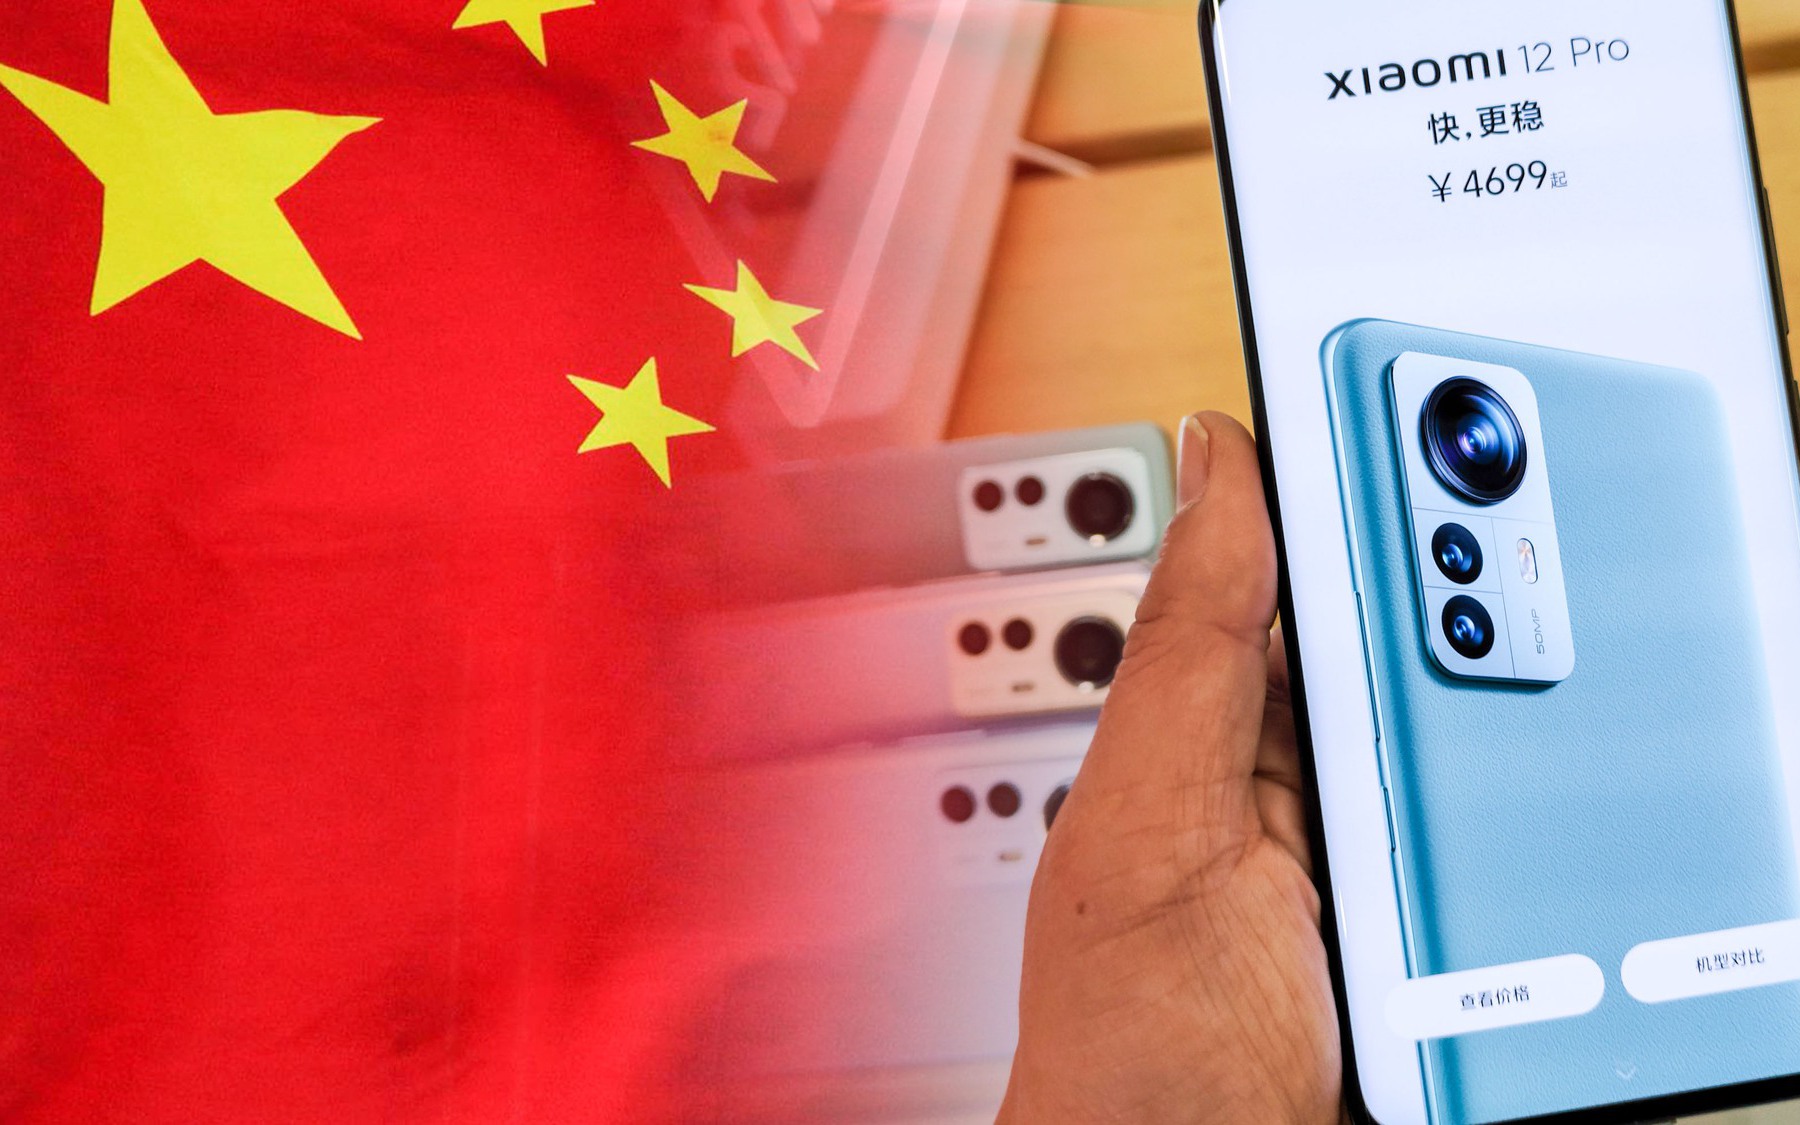 Xiaomi has been dealt a ‘heavy blow’ to business